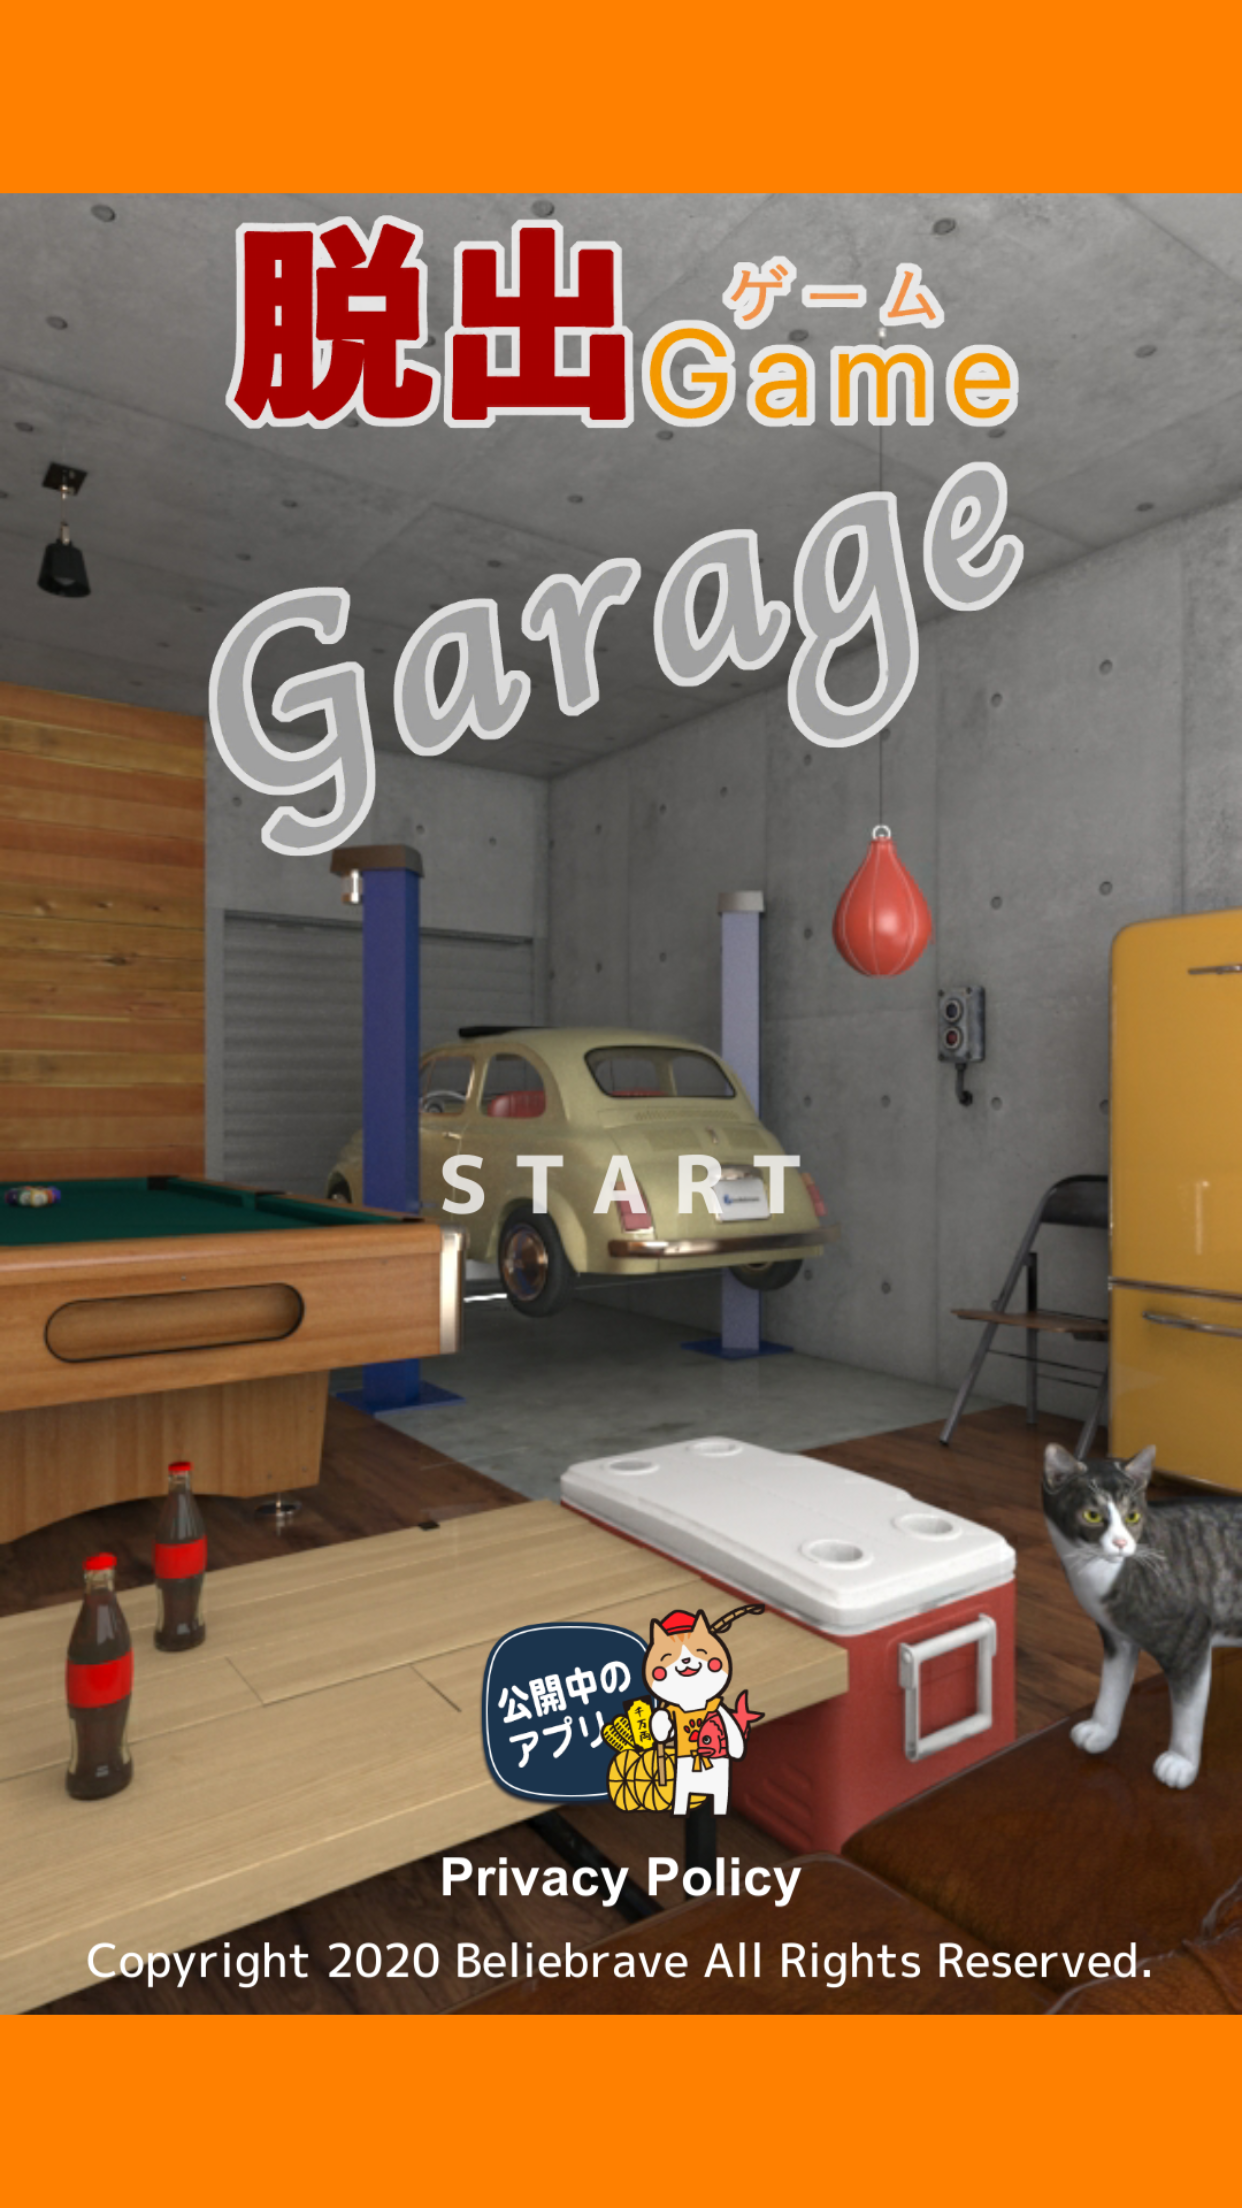 Screenshot 1 of juego de escape garaje 1.0.1